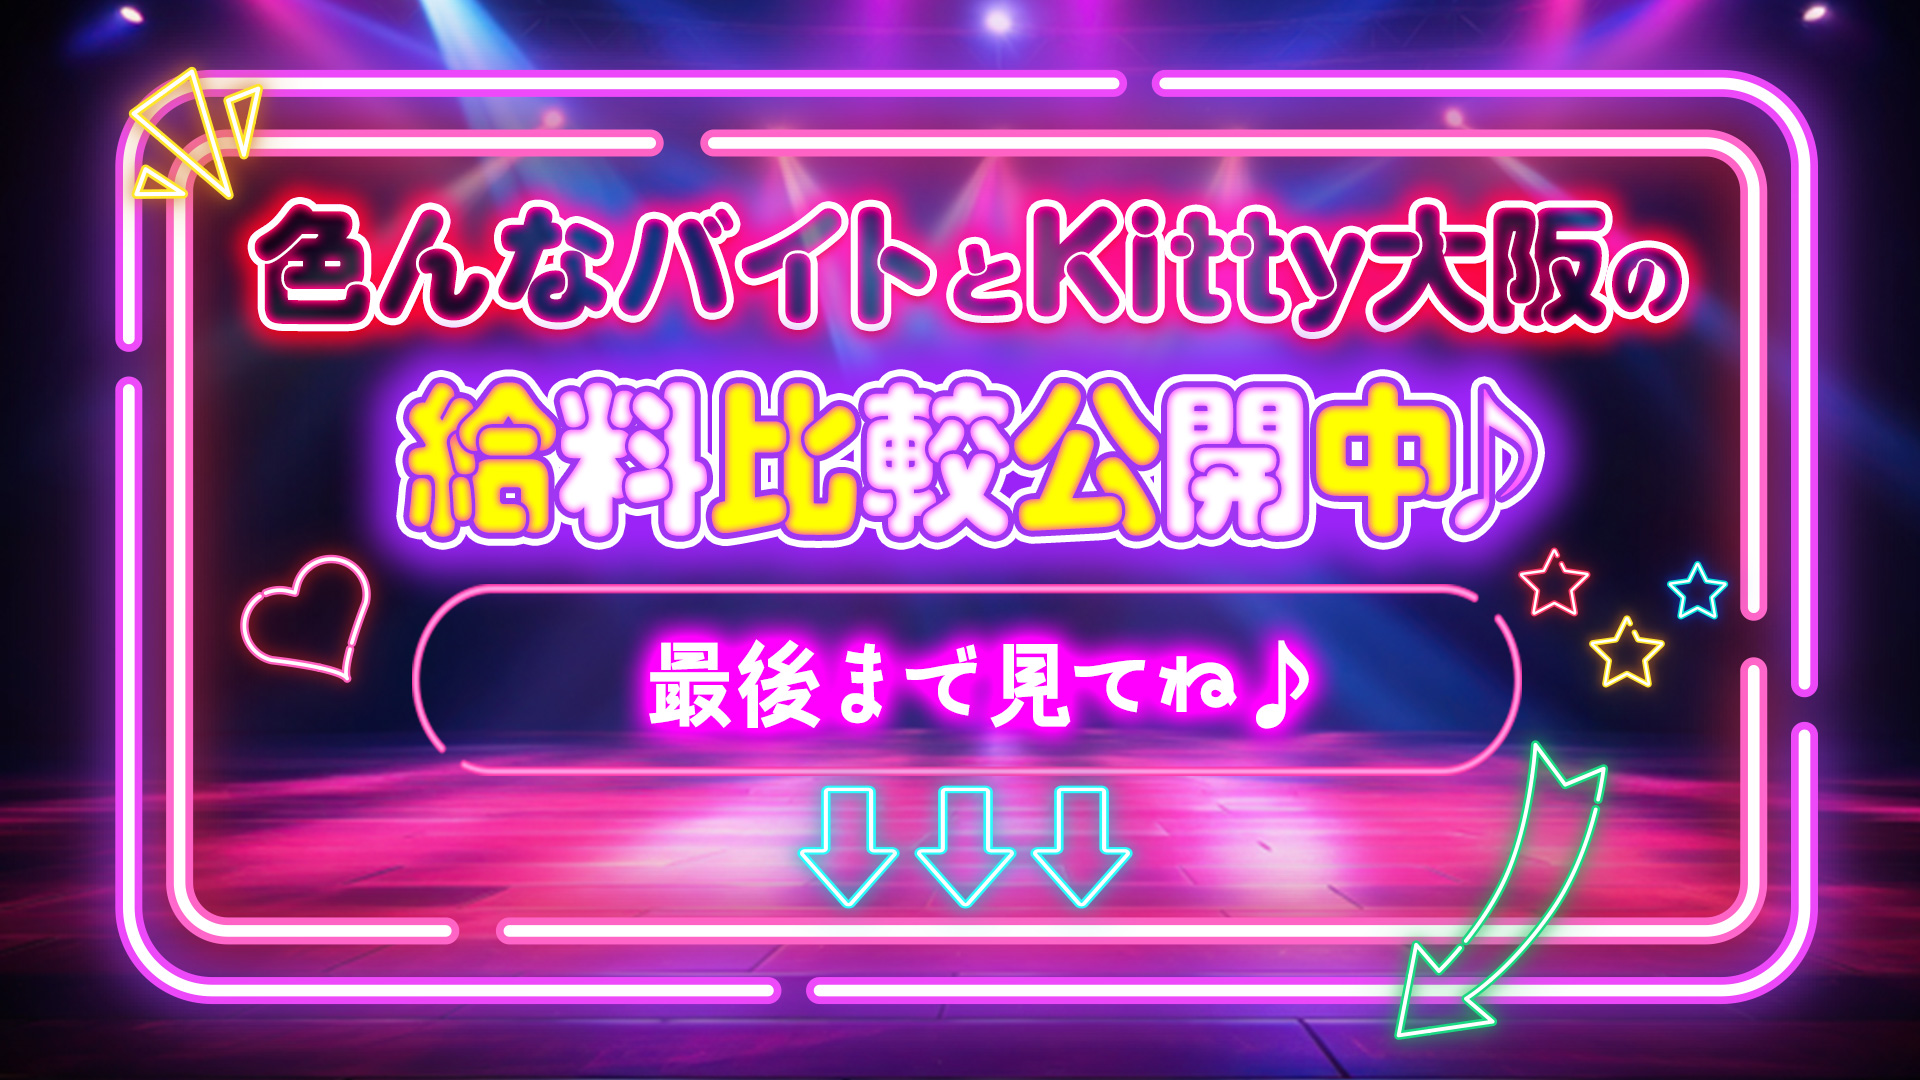 Kitty大阪 十三店